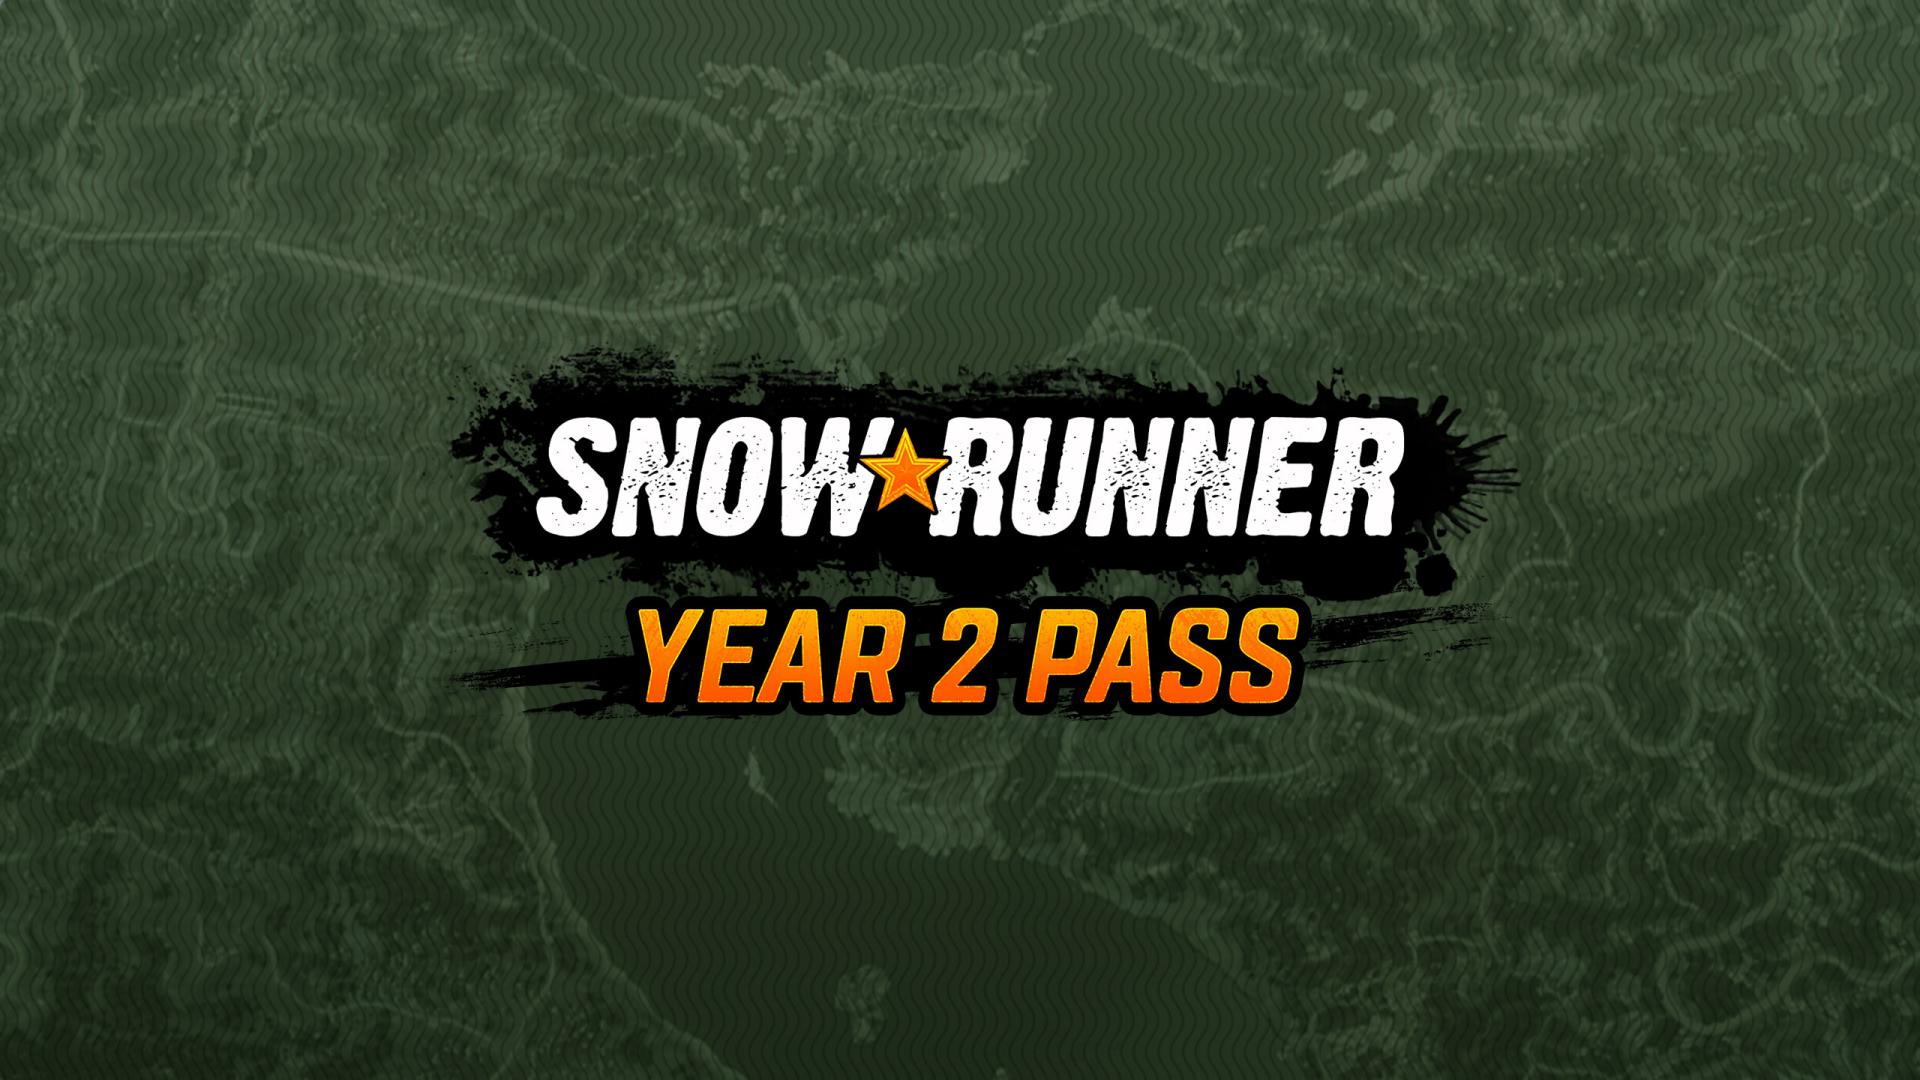 Snowyear2pass